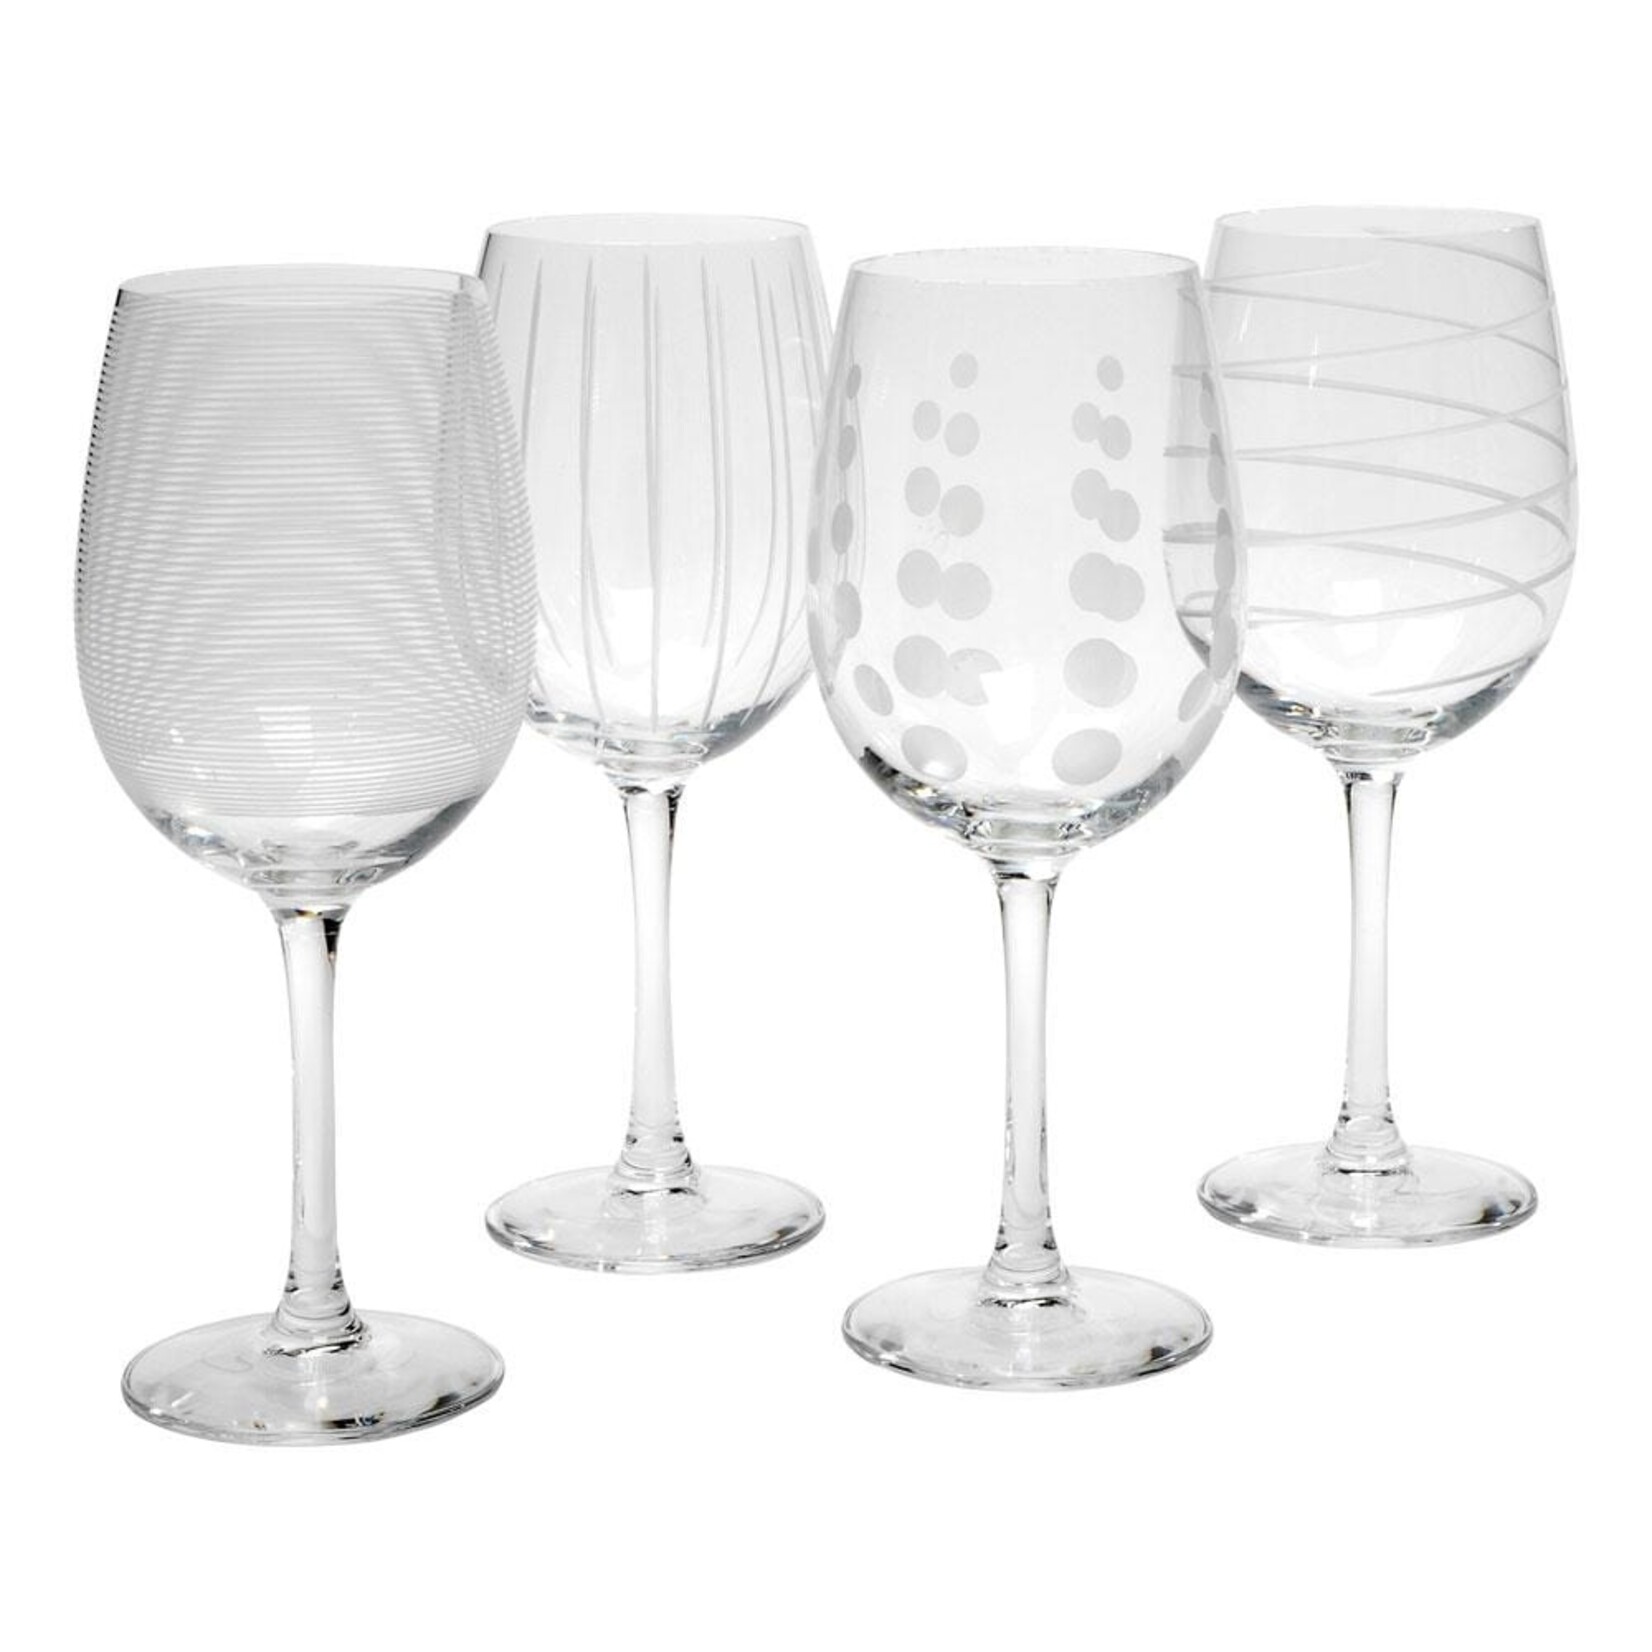 Cheers White Wine Glasses - Set of 4